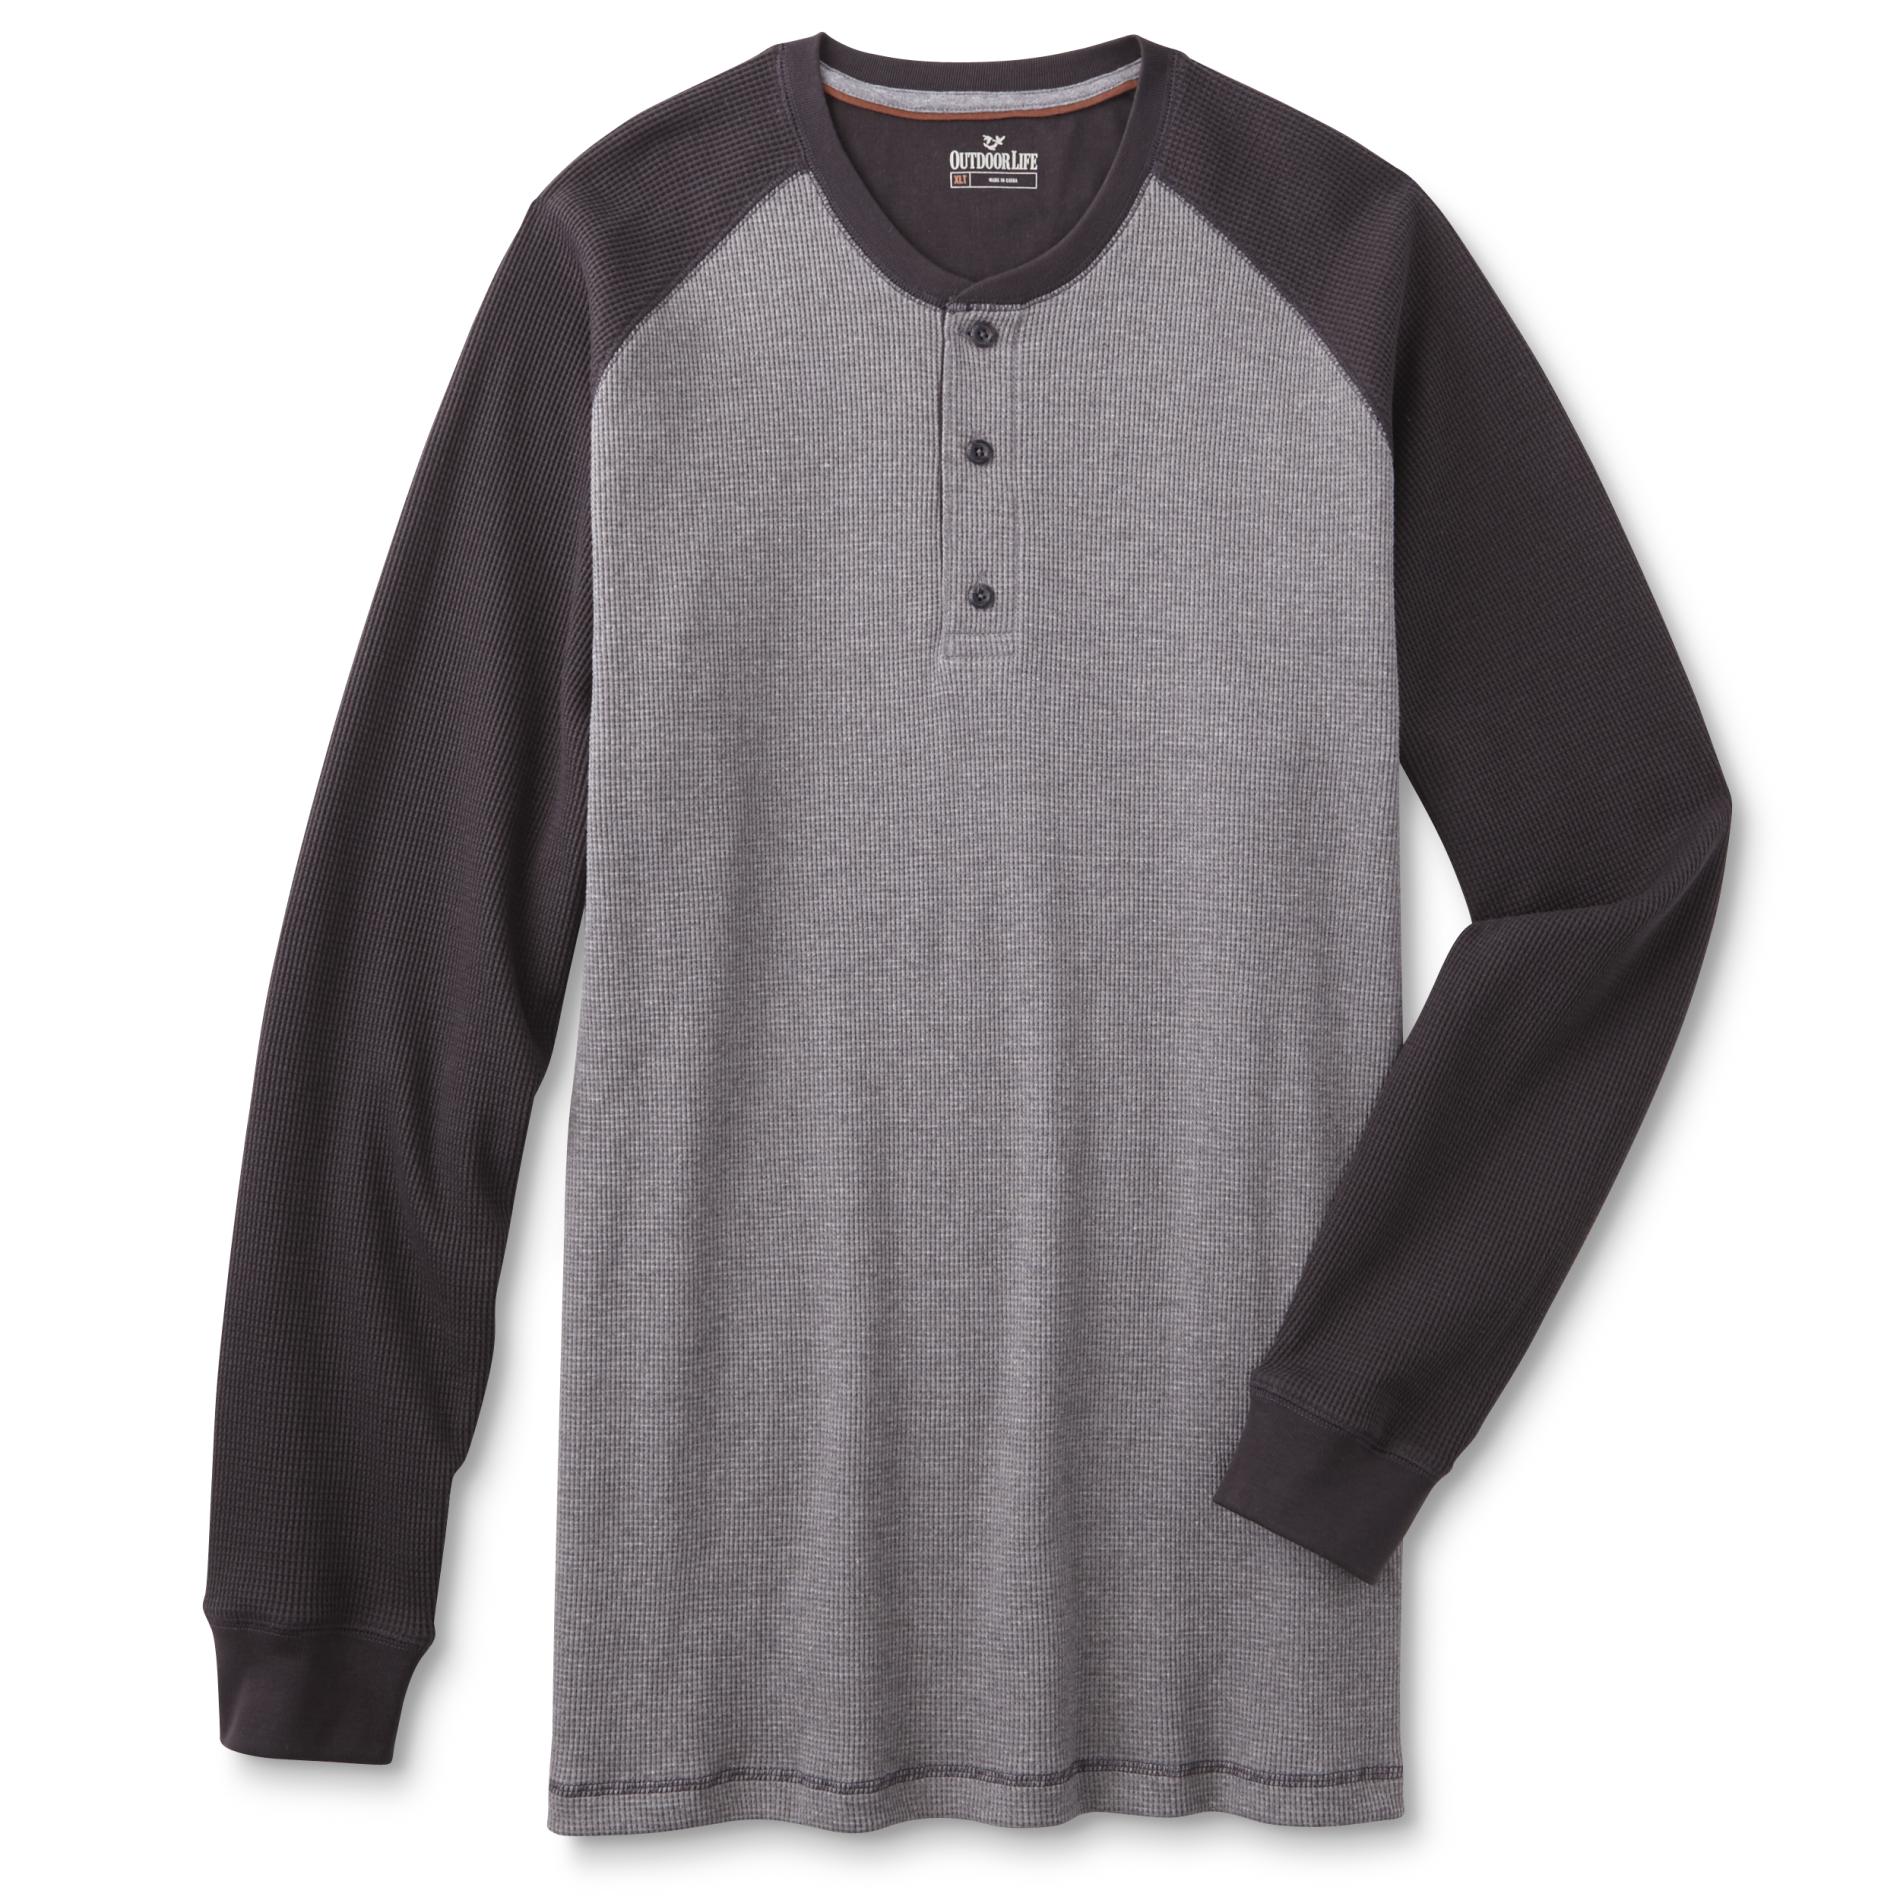 Outdoor Life Men's Big & Tall Thermal Henley Shirt - Colorblock